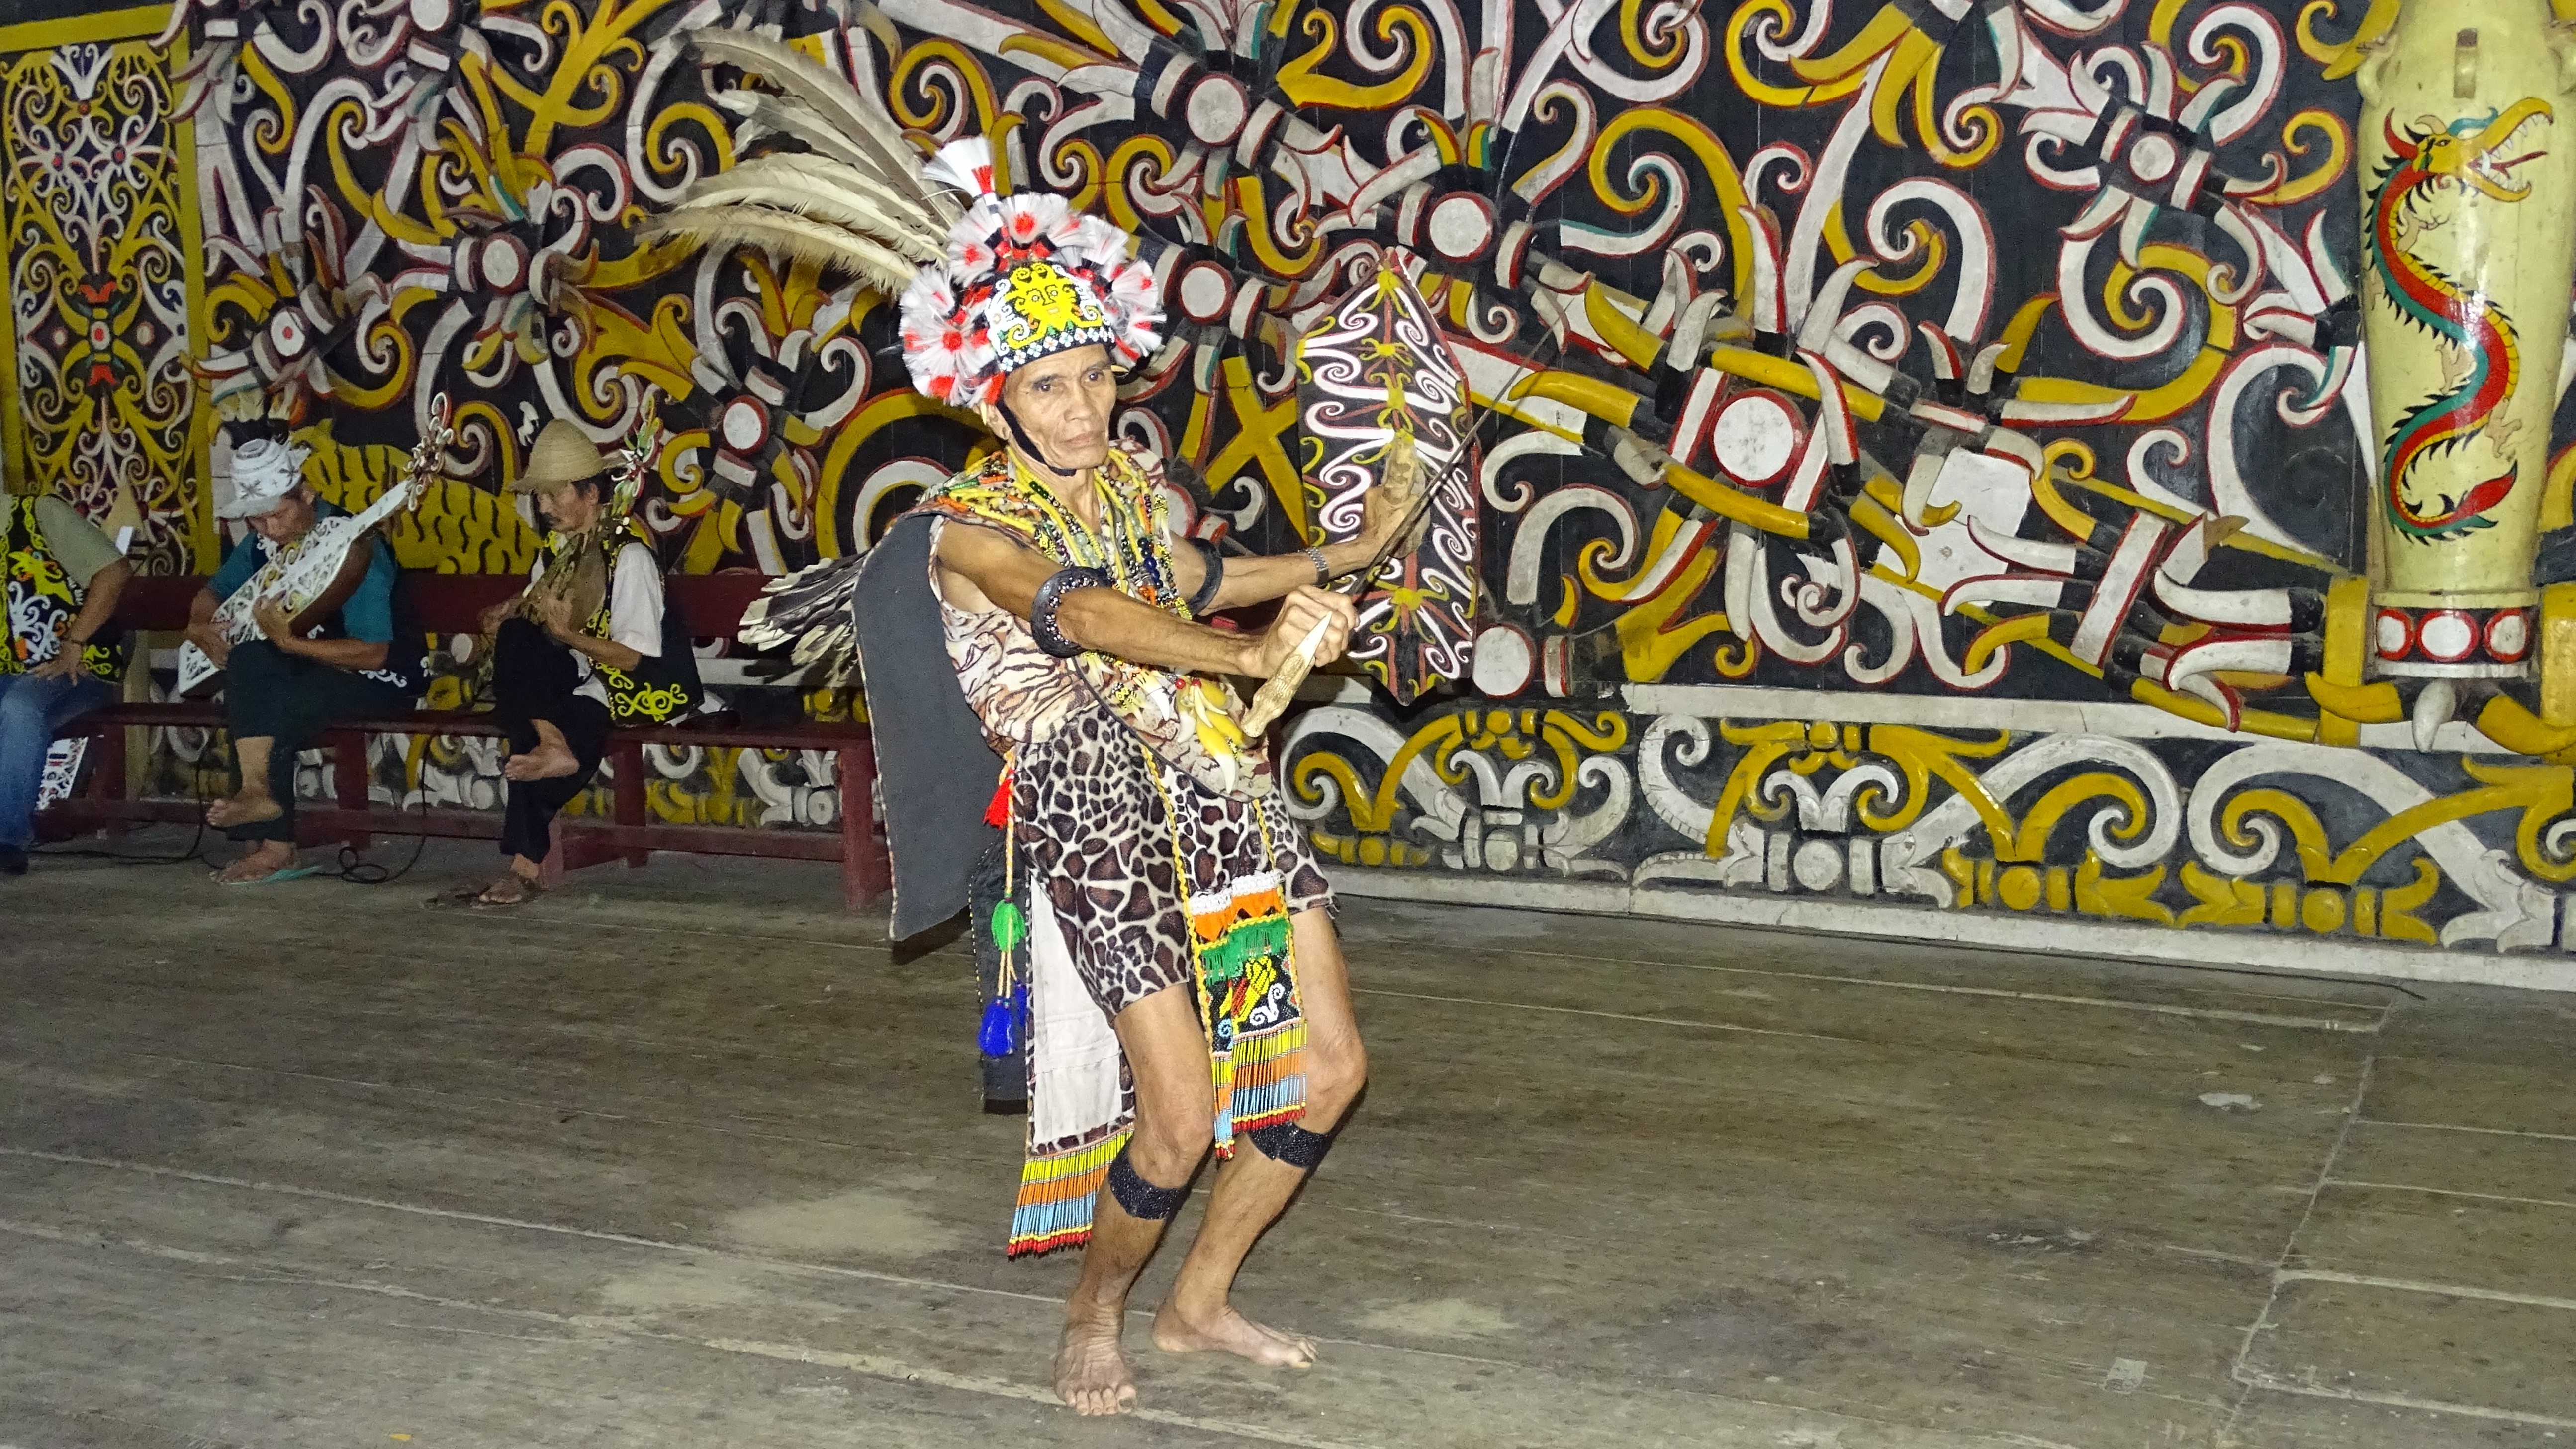 Dayak Culture experience trip tours kalimantan Indonesia